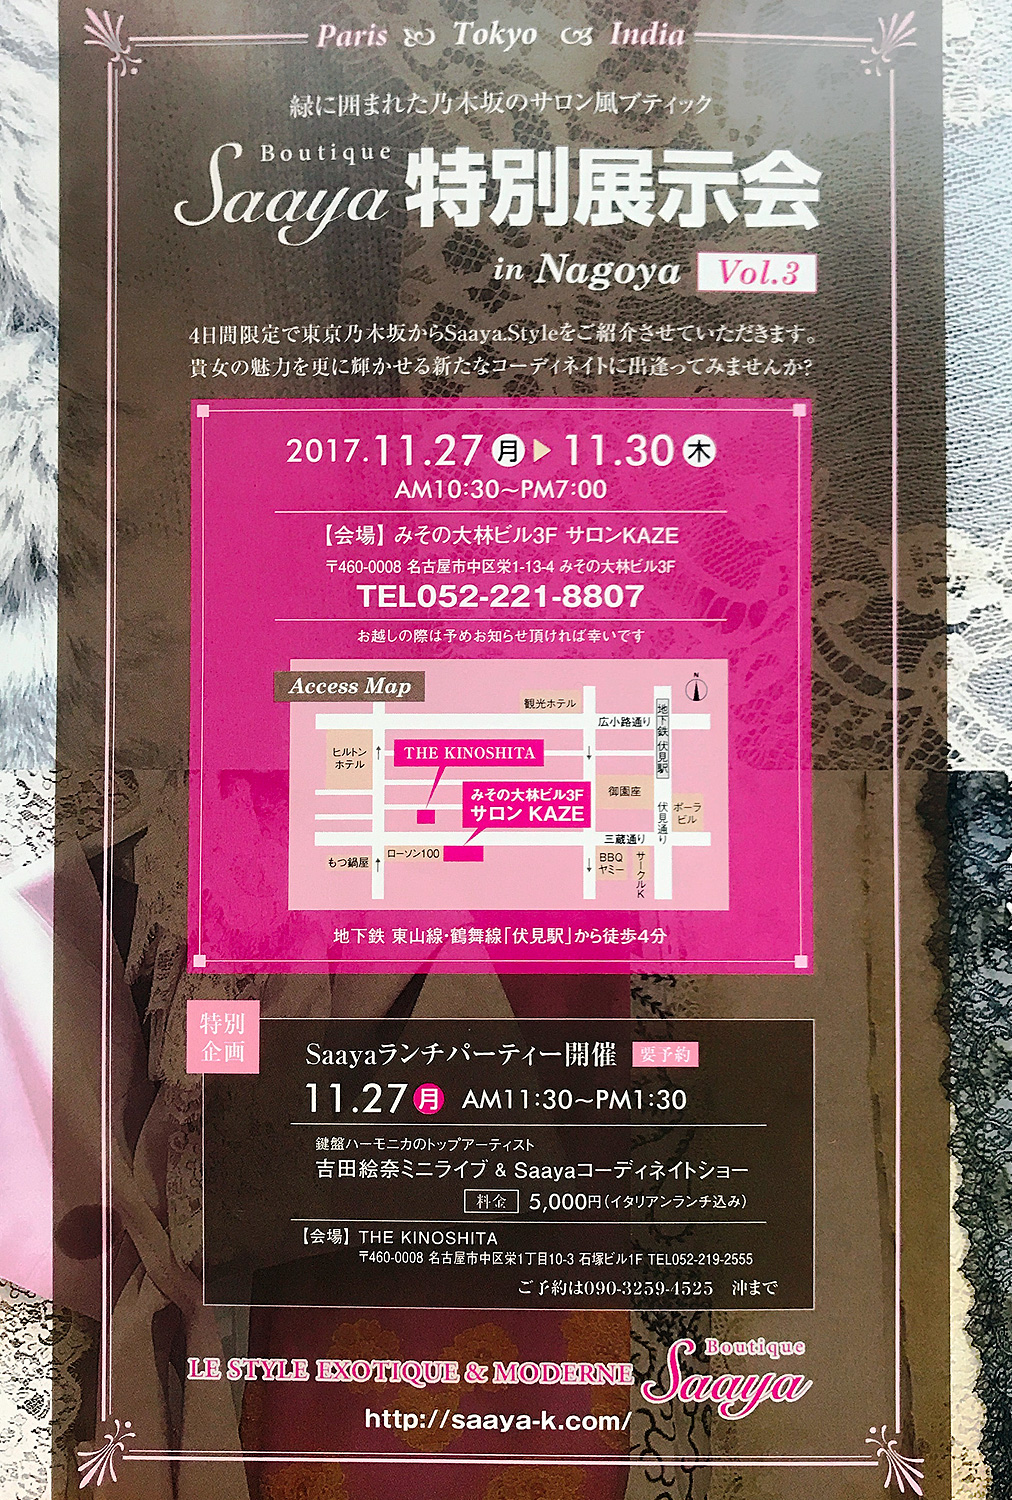 Boutique Saaya 特別展示会 Vol.3 in Nagoya